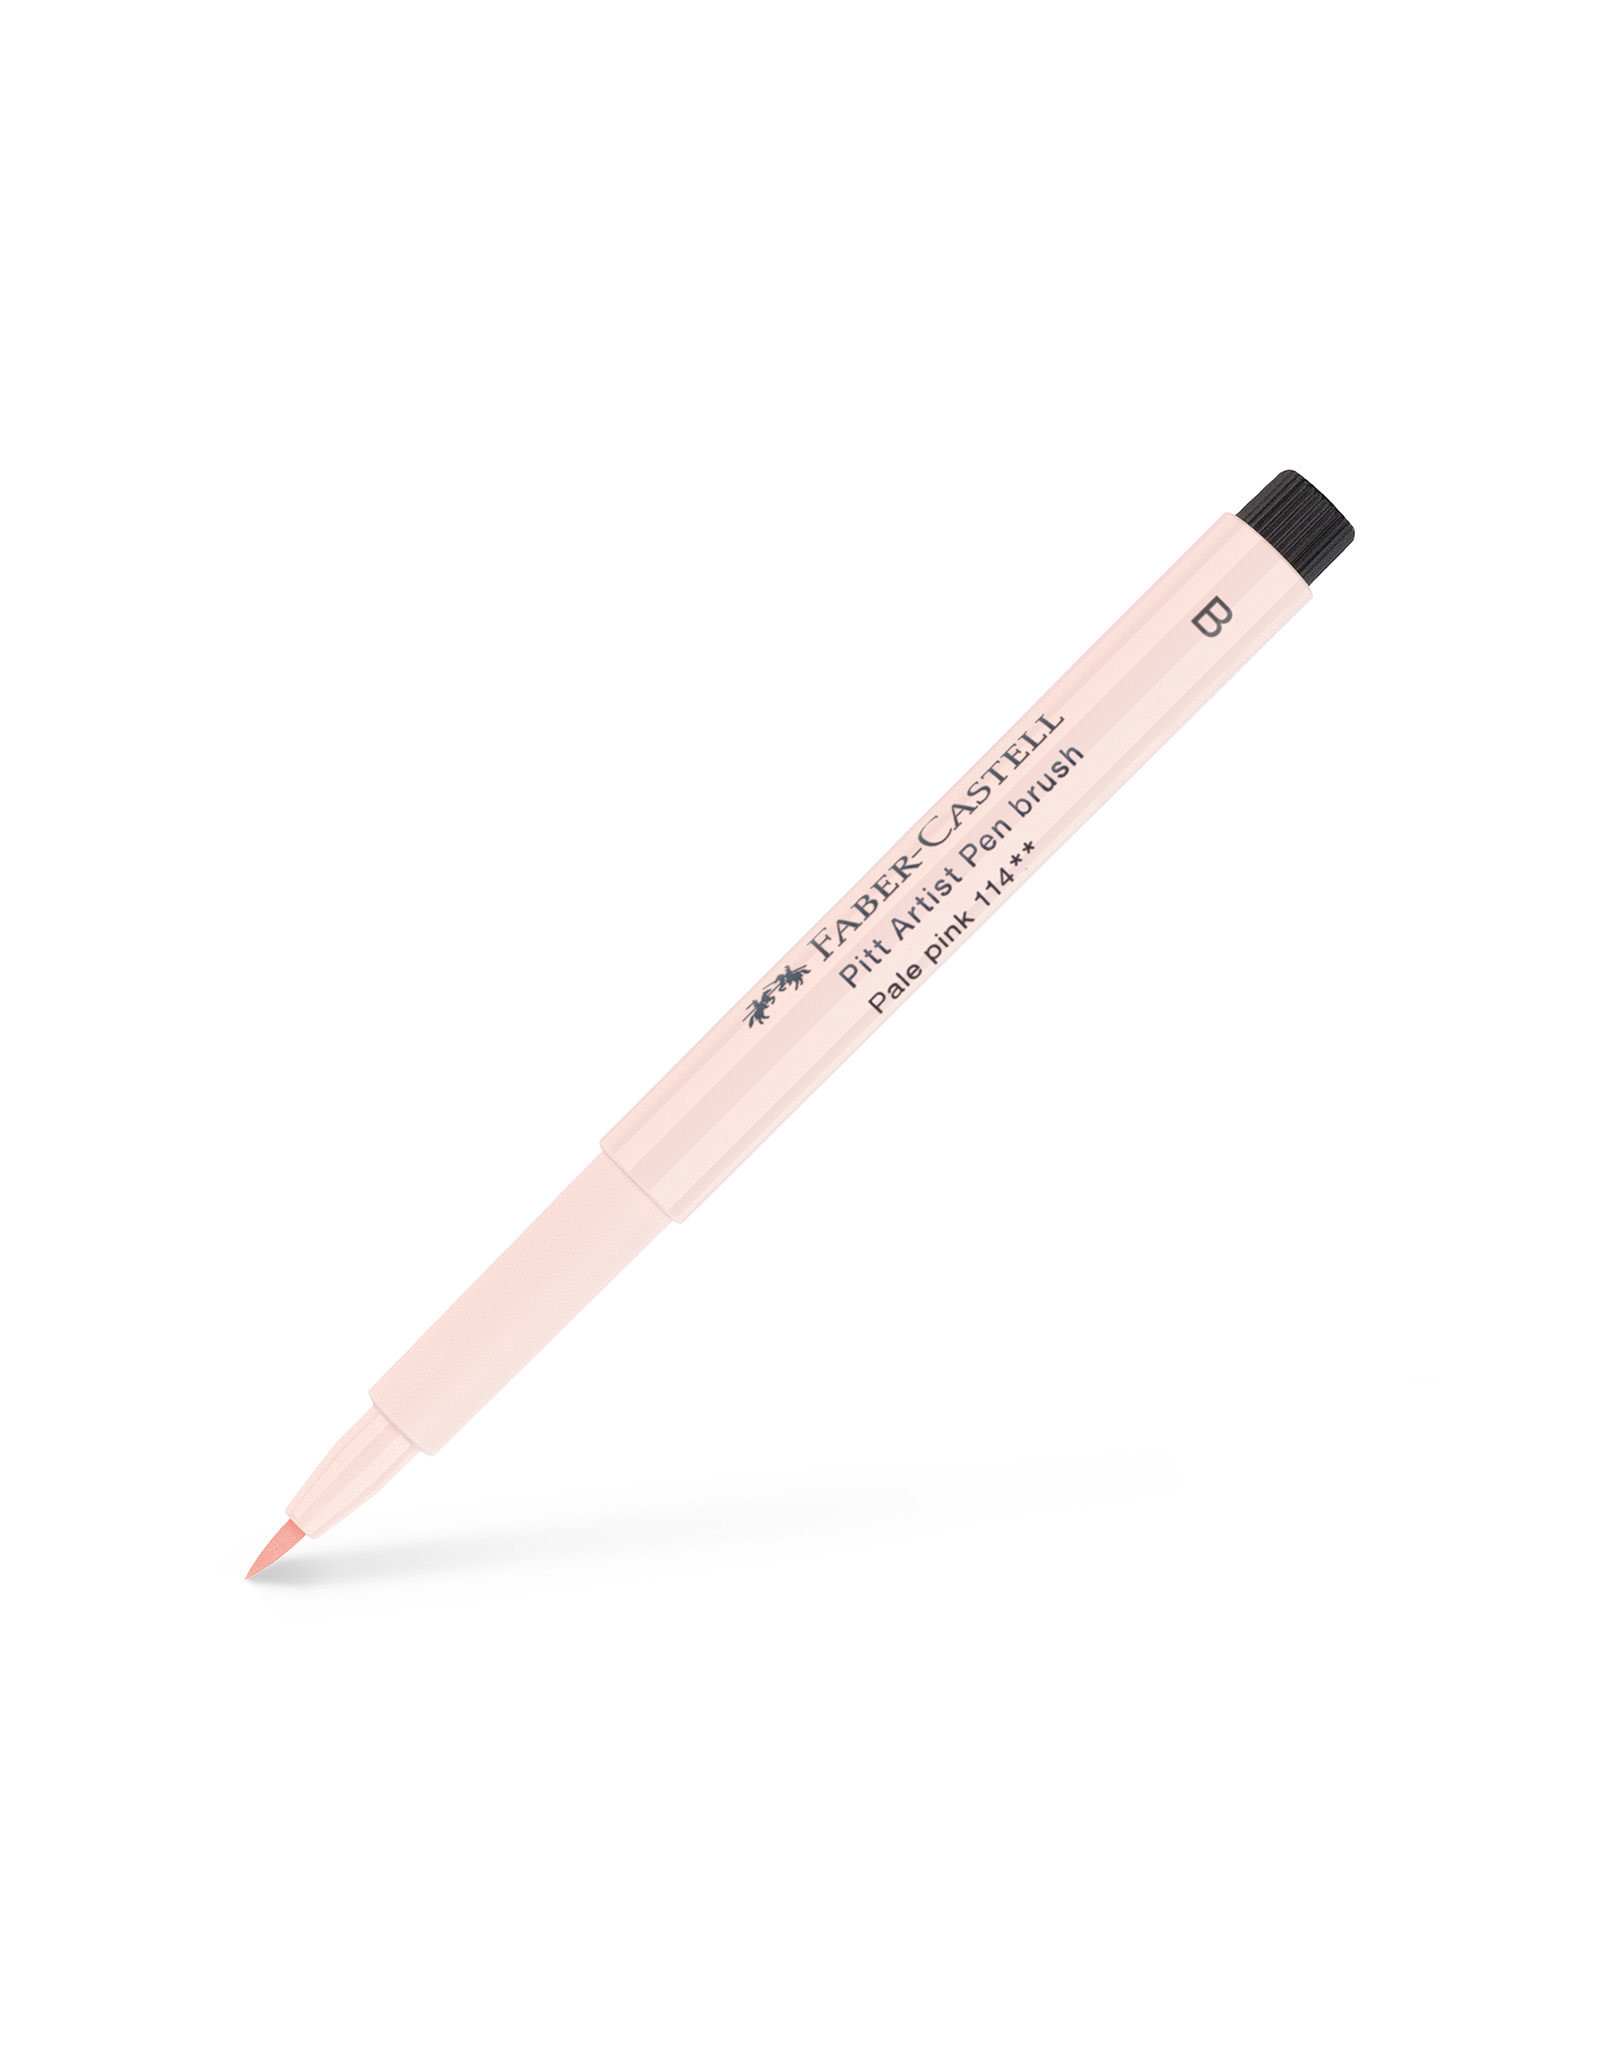 FABER-CASTELL Pitt Artist Pen, Brush, Pale Pink